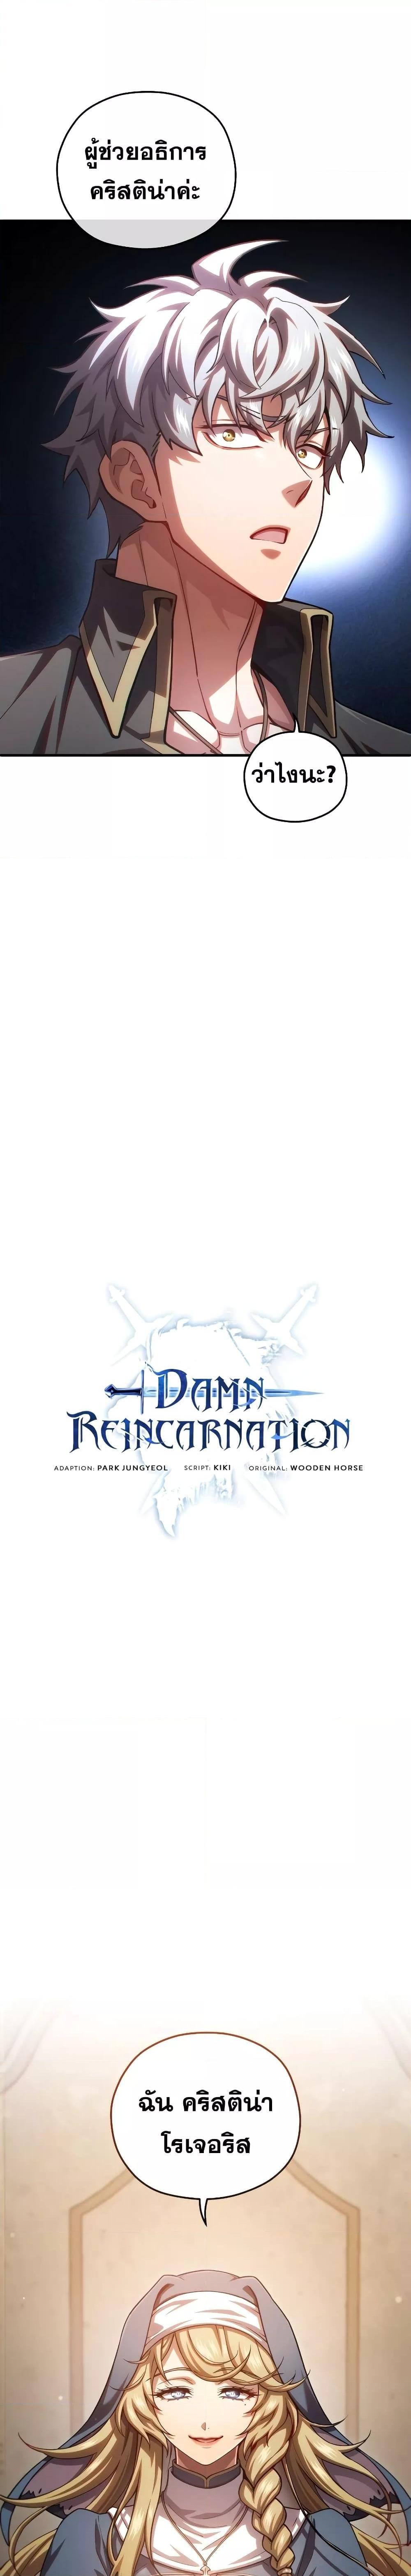 Damn Reincarnation 79 11